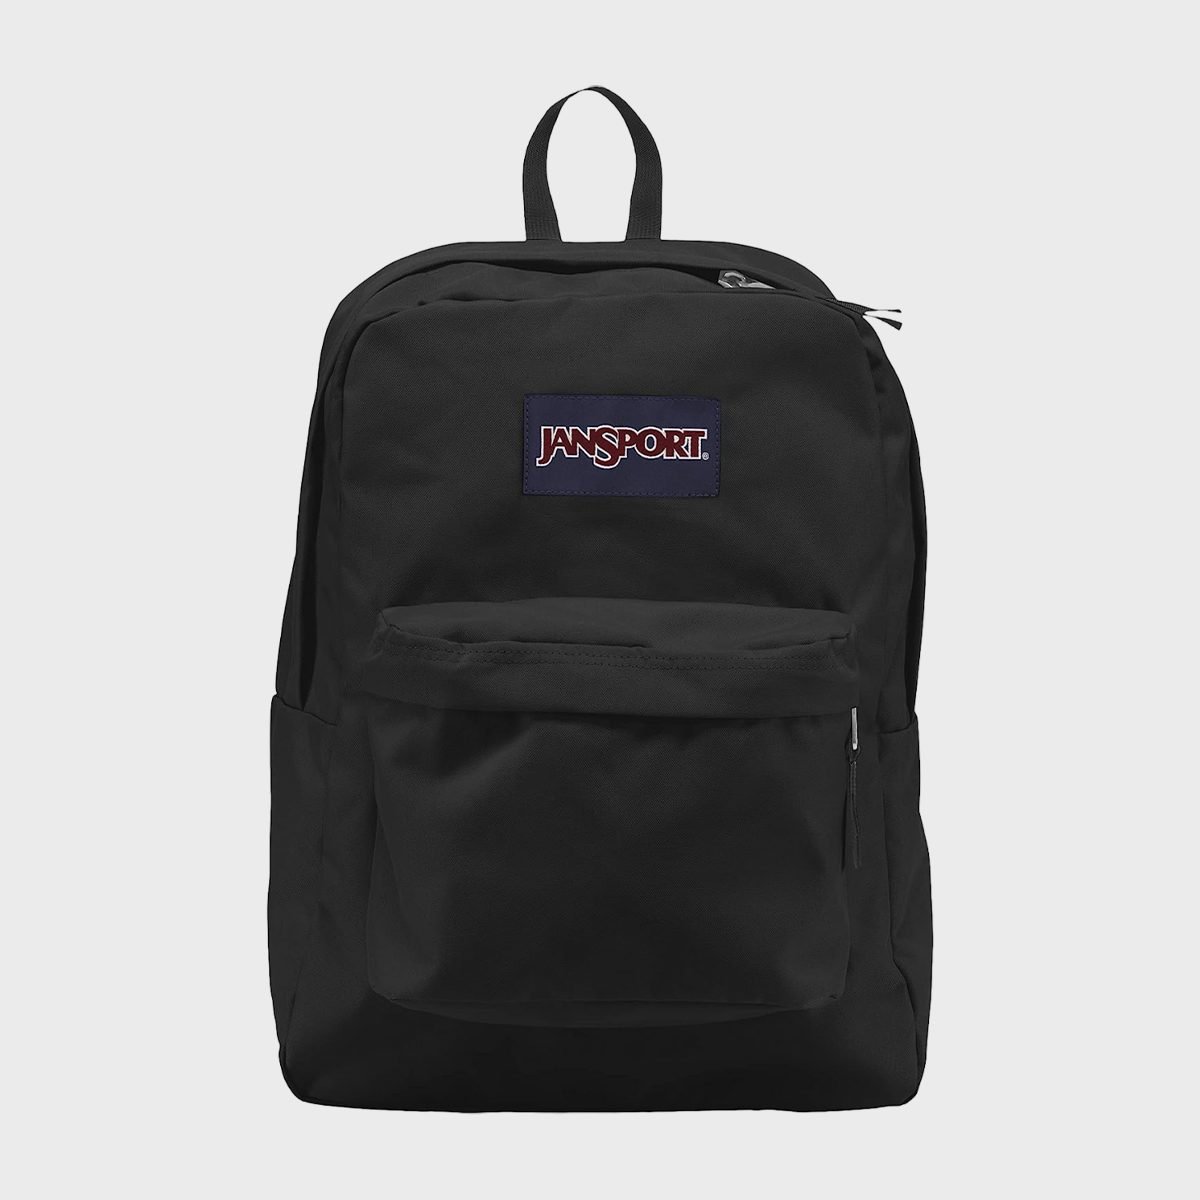 Jansport Backpack Ecomm Via Amazon.com